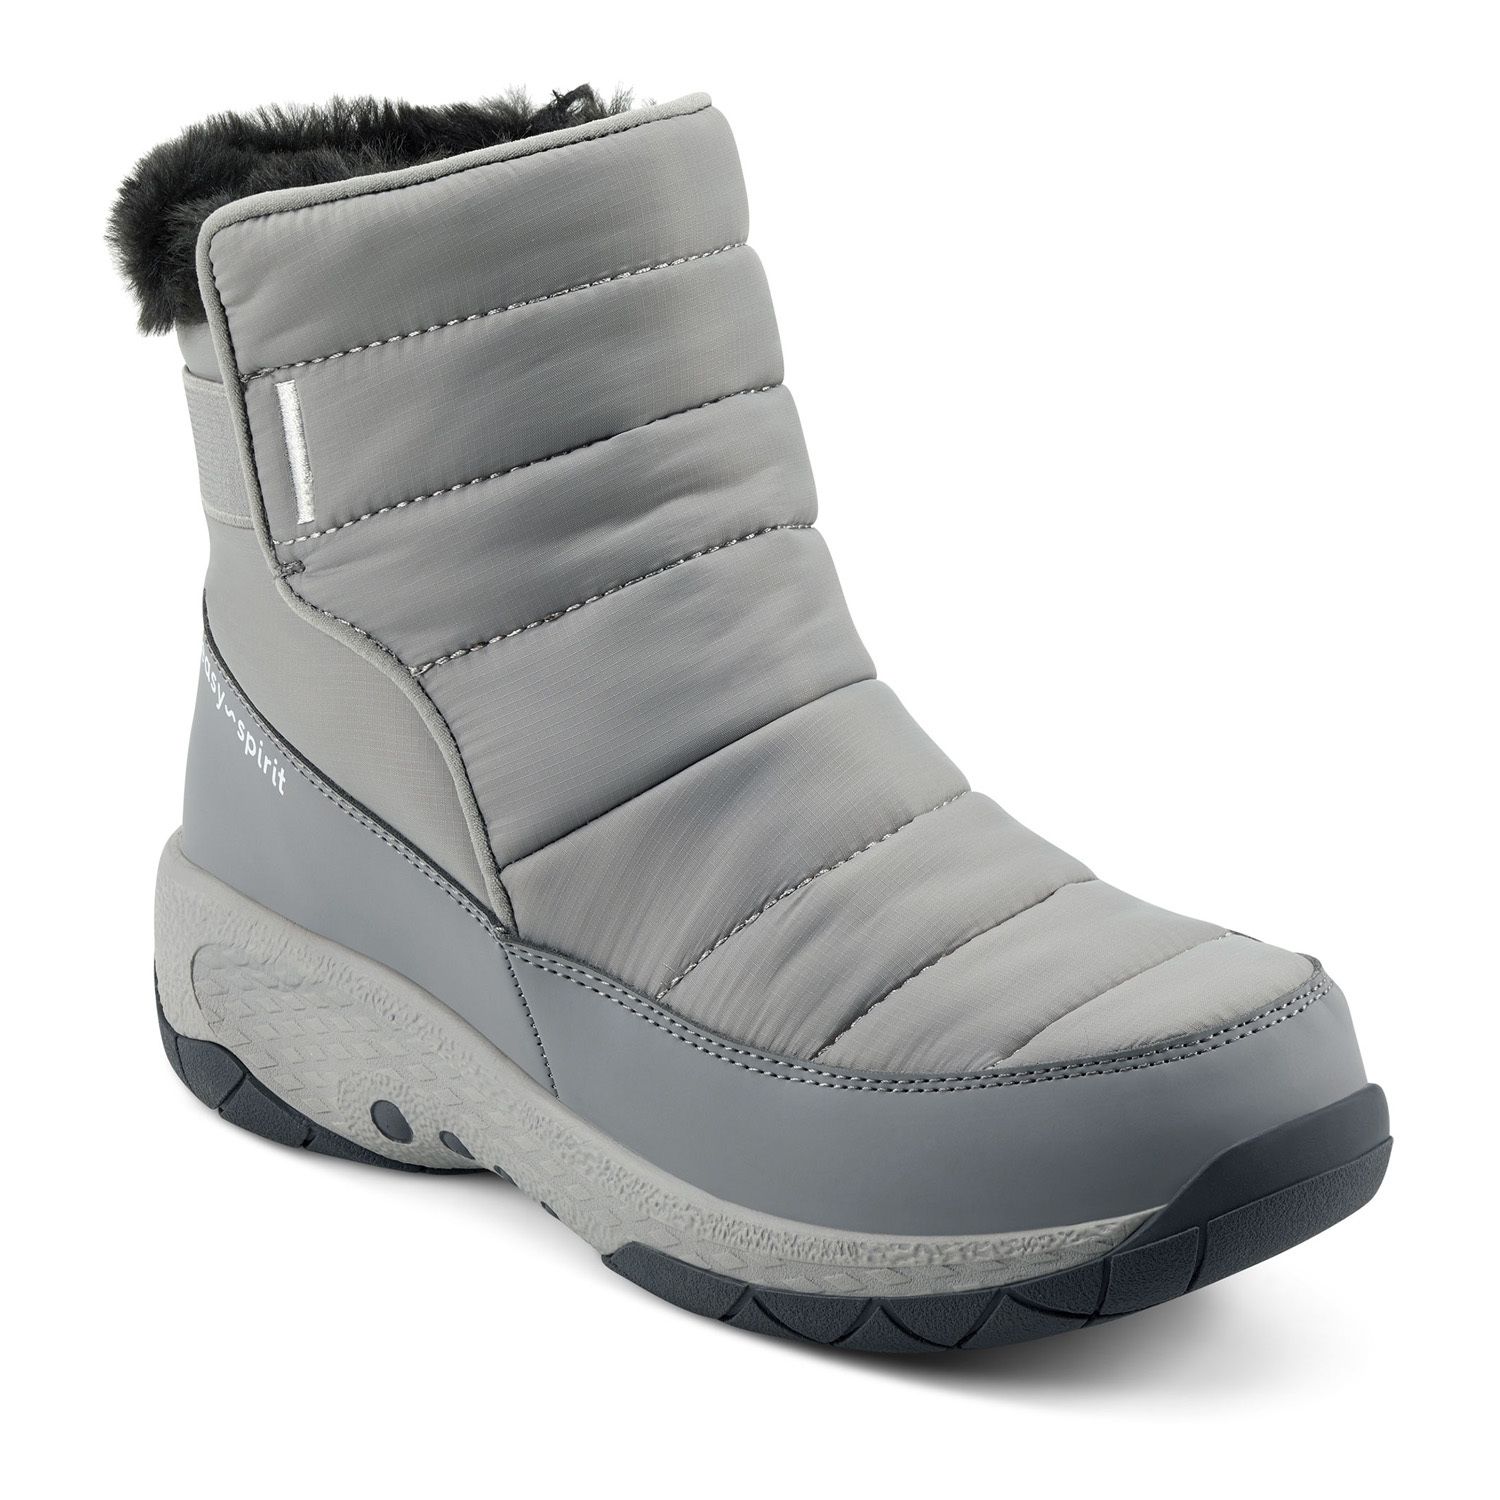 Image for Easy Spirit Jorneon Women's Water-Repellent Snow Boots at Kohl's.